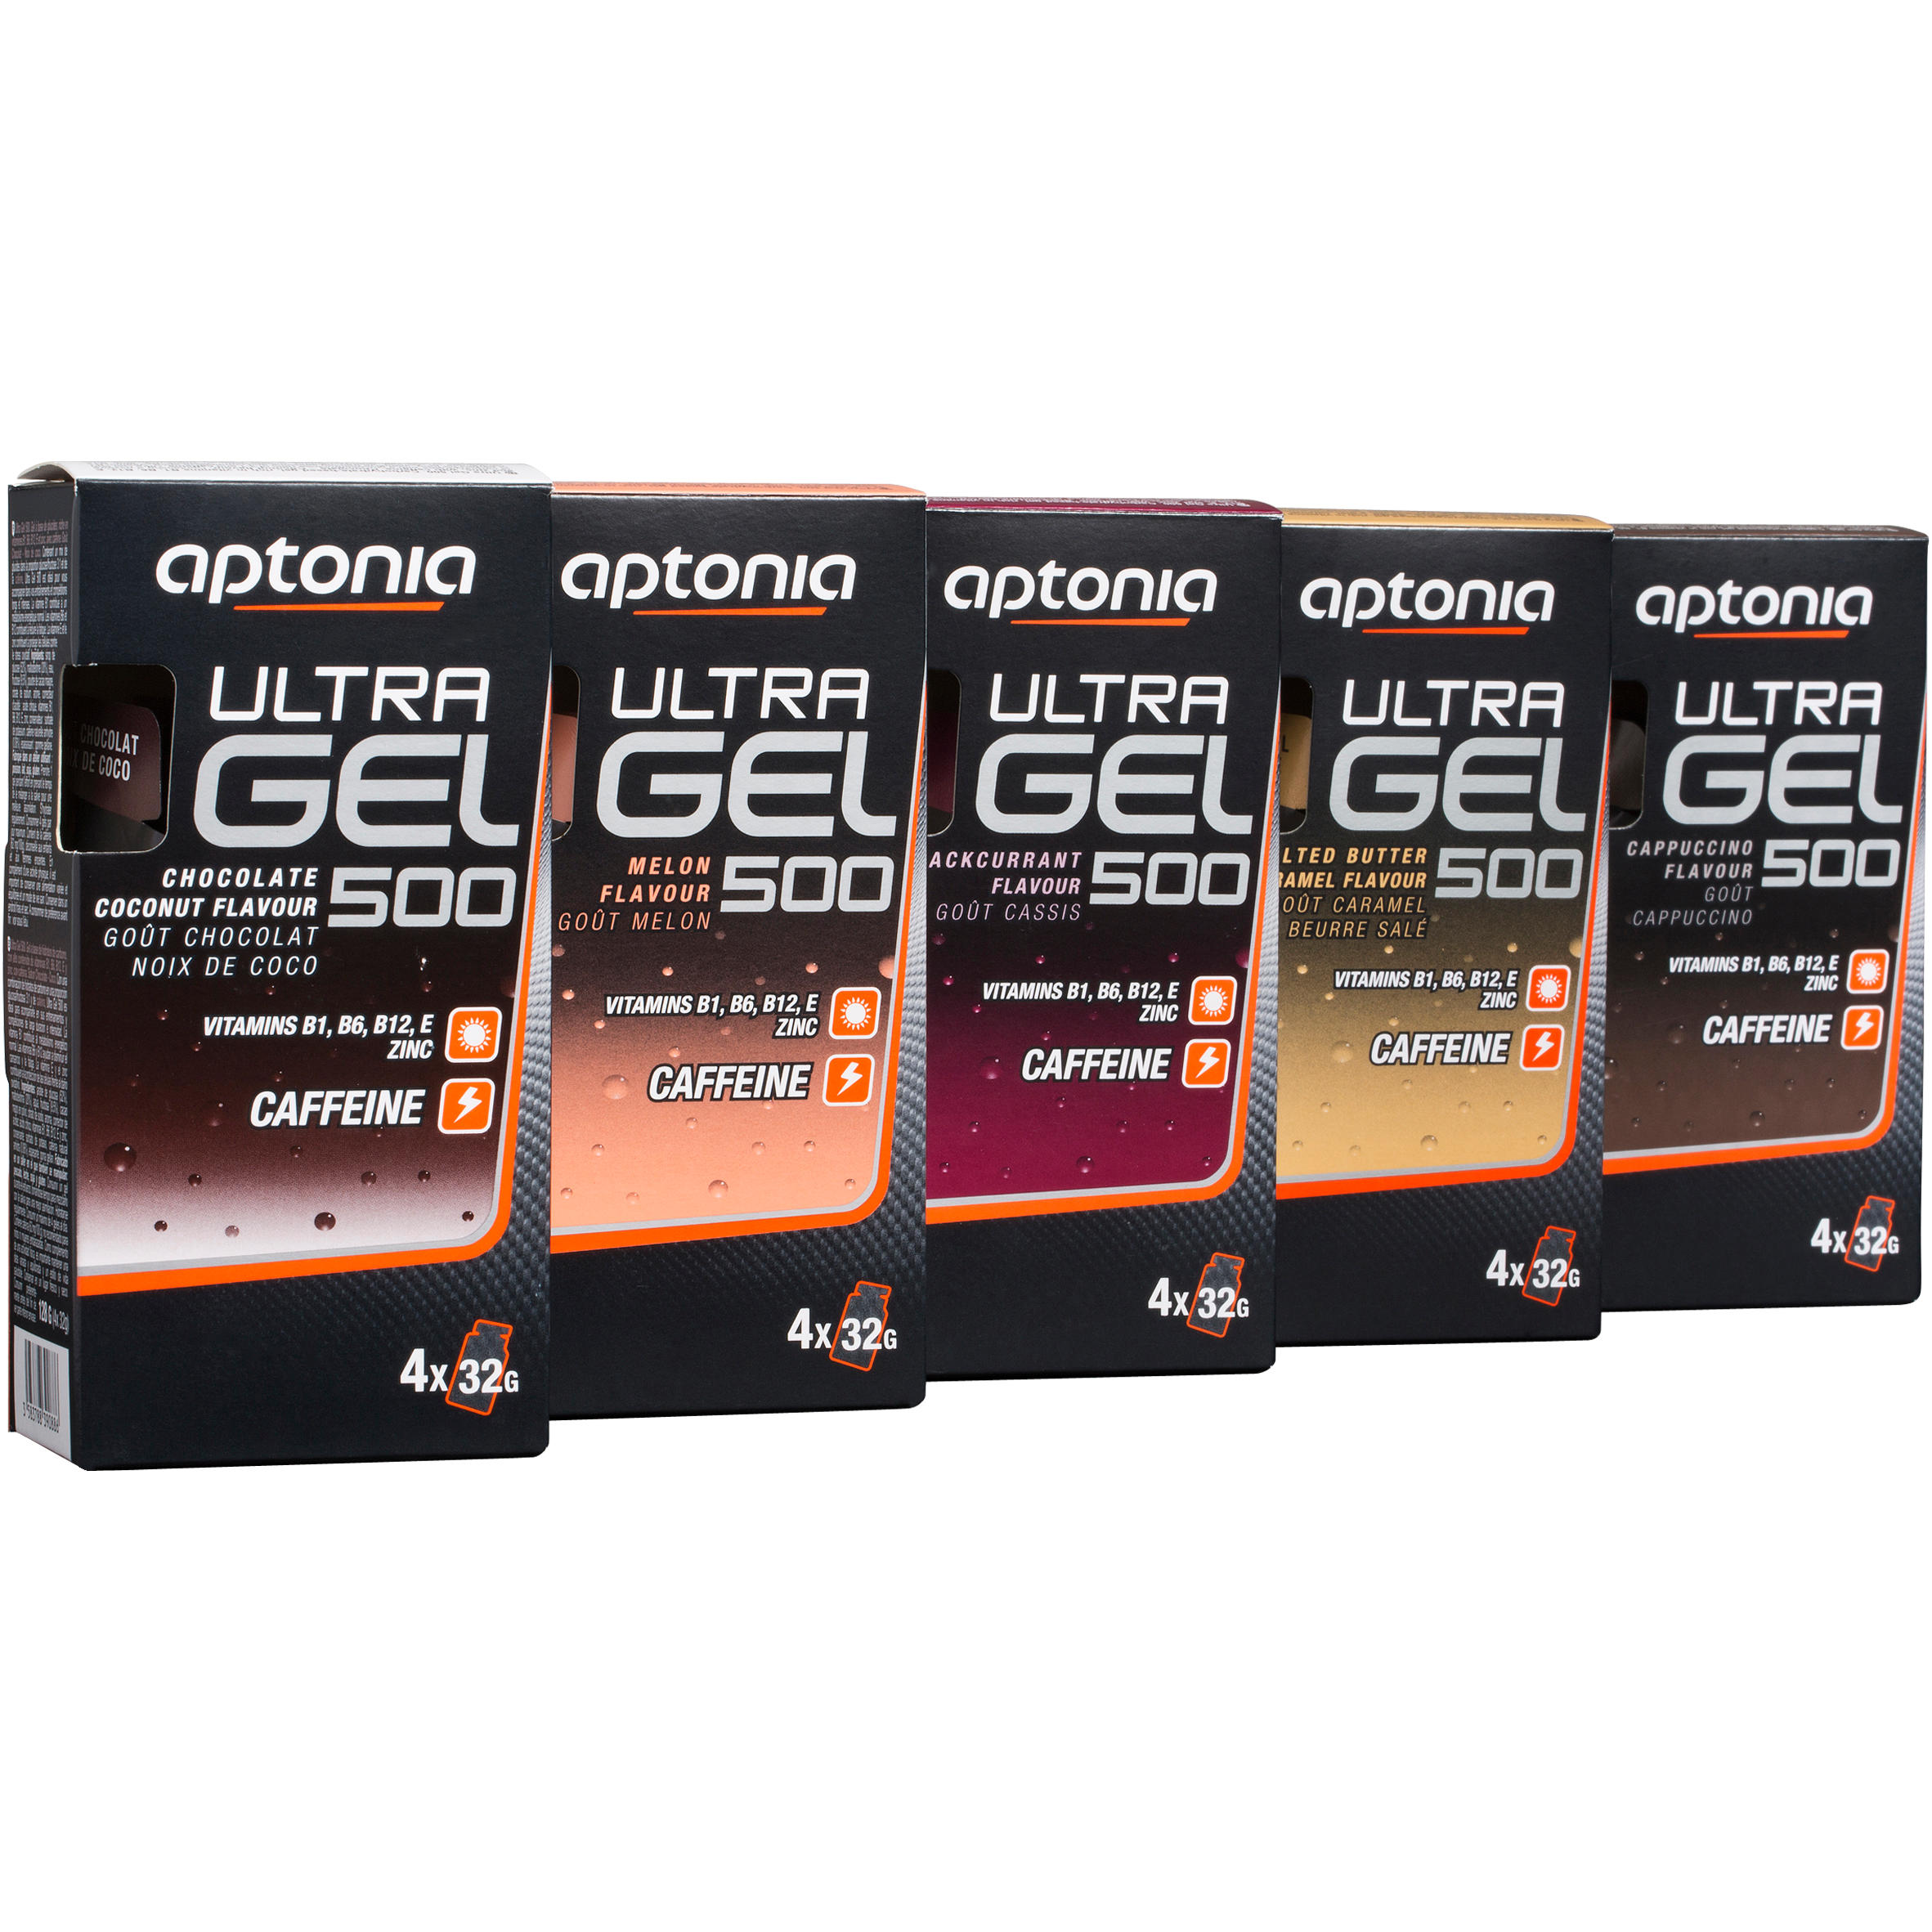 Ultra Gel 500 Energy Gel 4x32g - Chocolate/Coconut 9/9